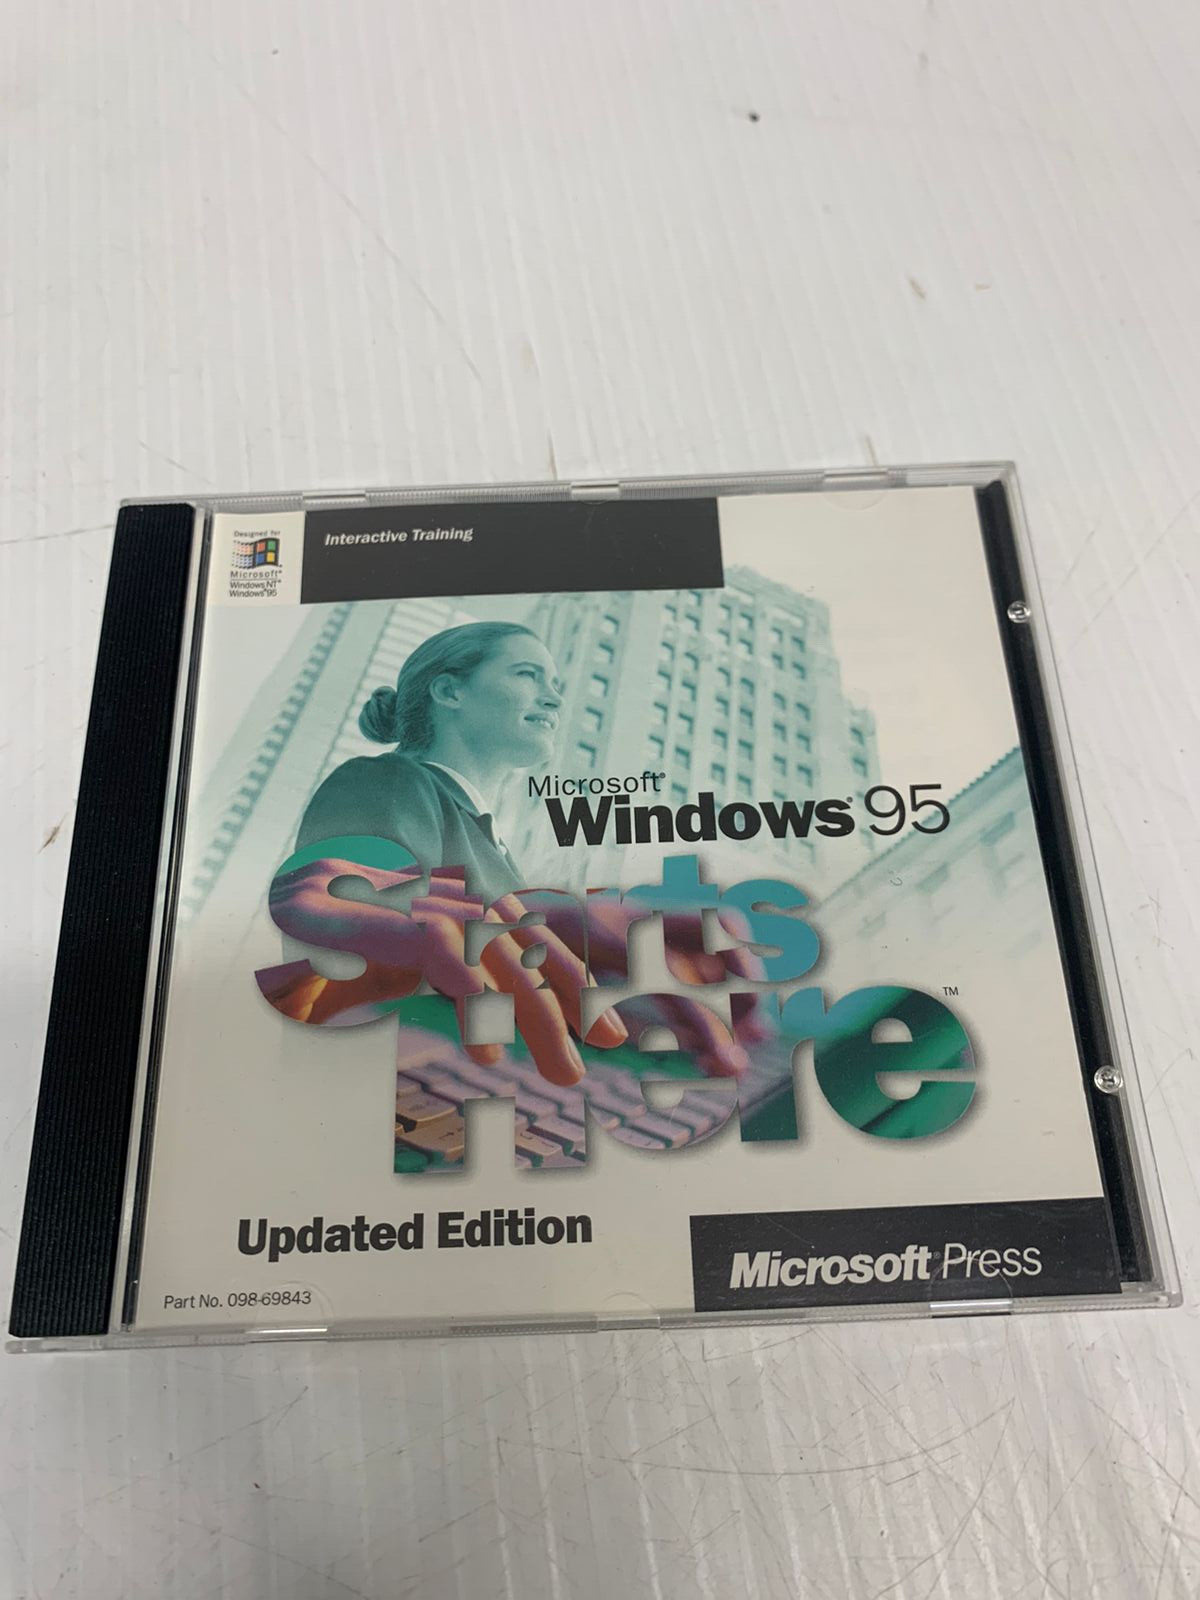 Microsoft Windows 95 Updated Edition Starts Here 098-69843 